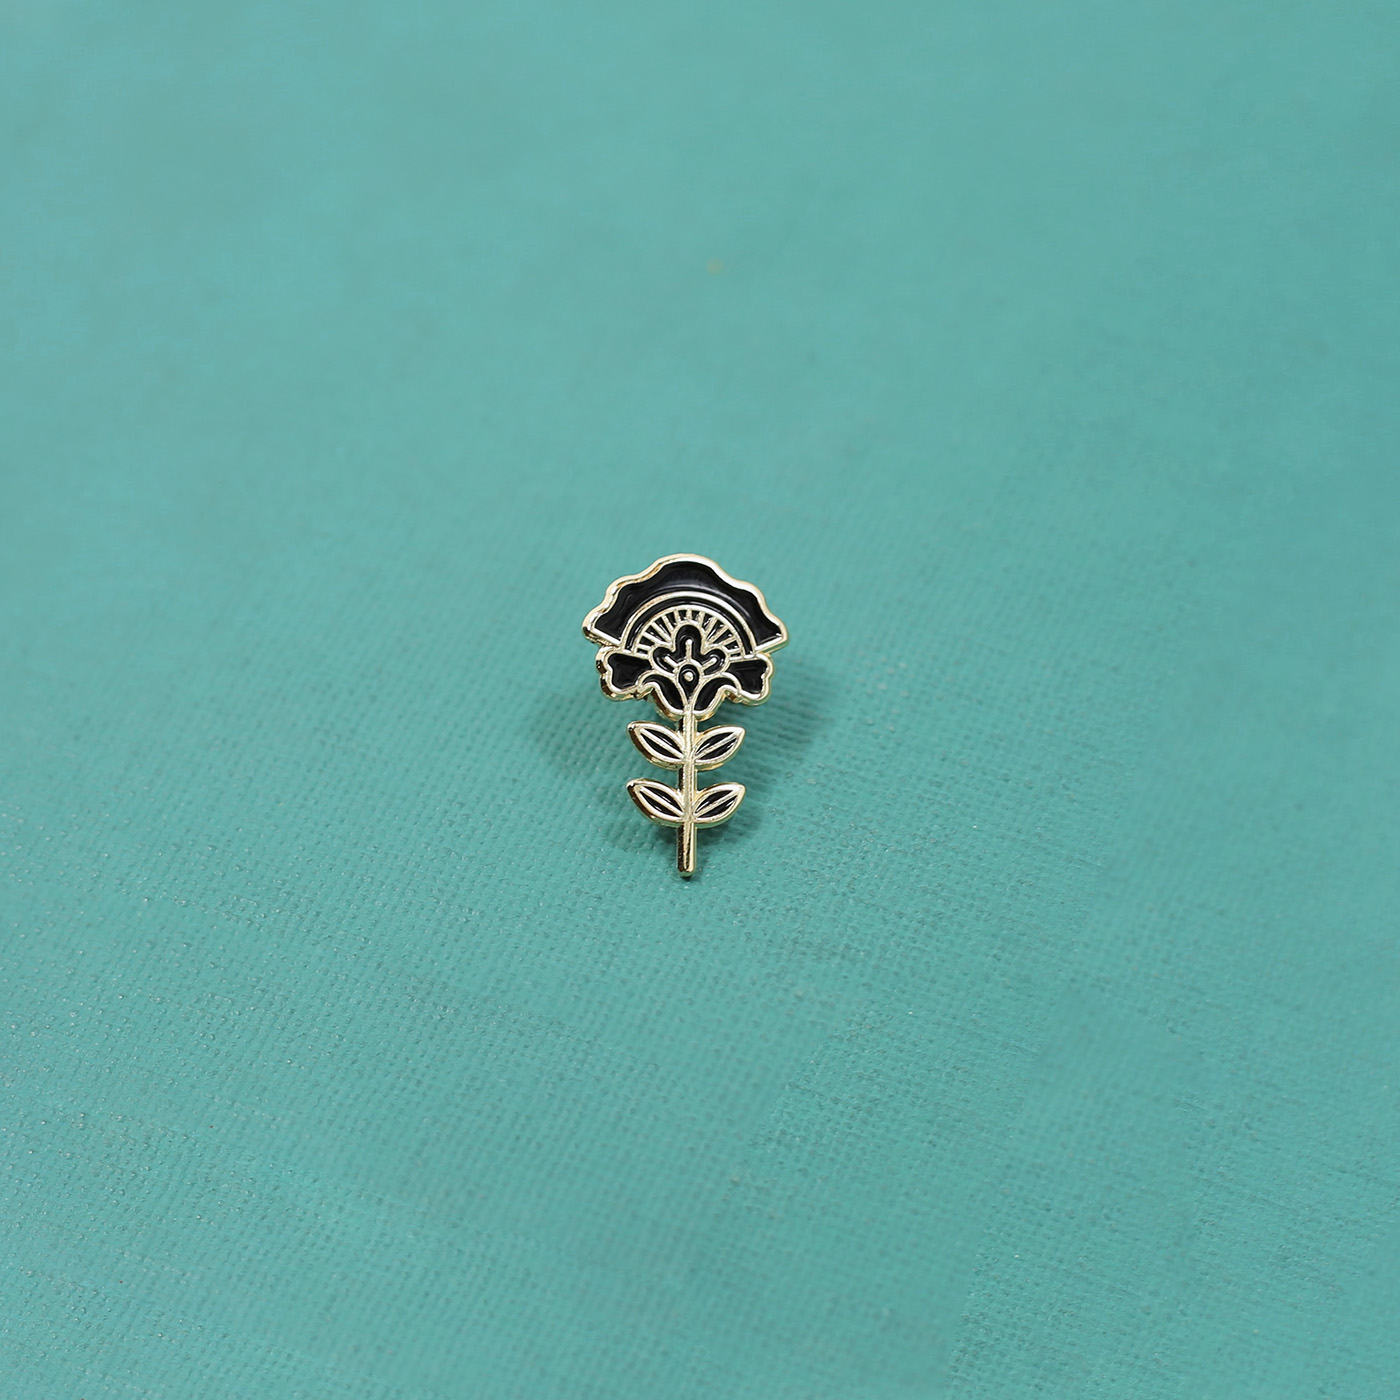 Enamel Pin pin flower ILLUSTRATION  lapel pin ottawa Canada Shopify store design